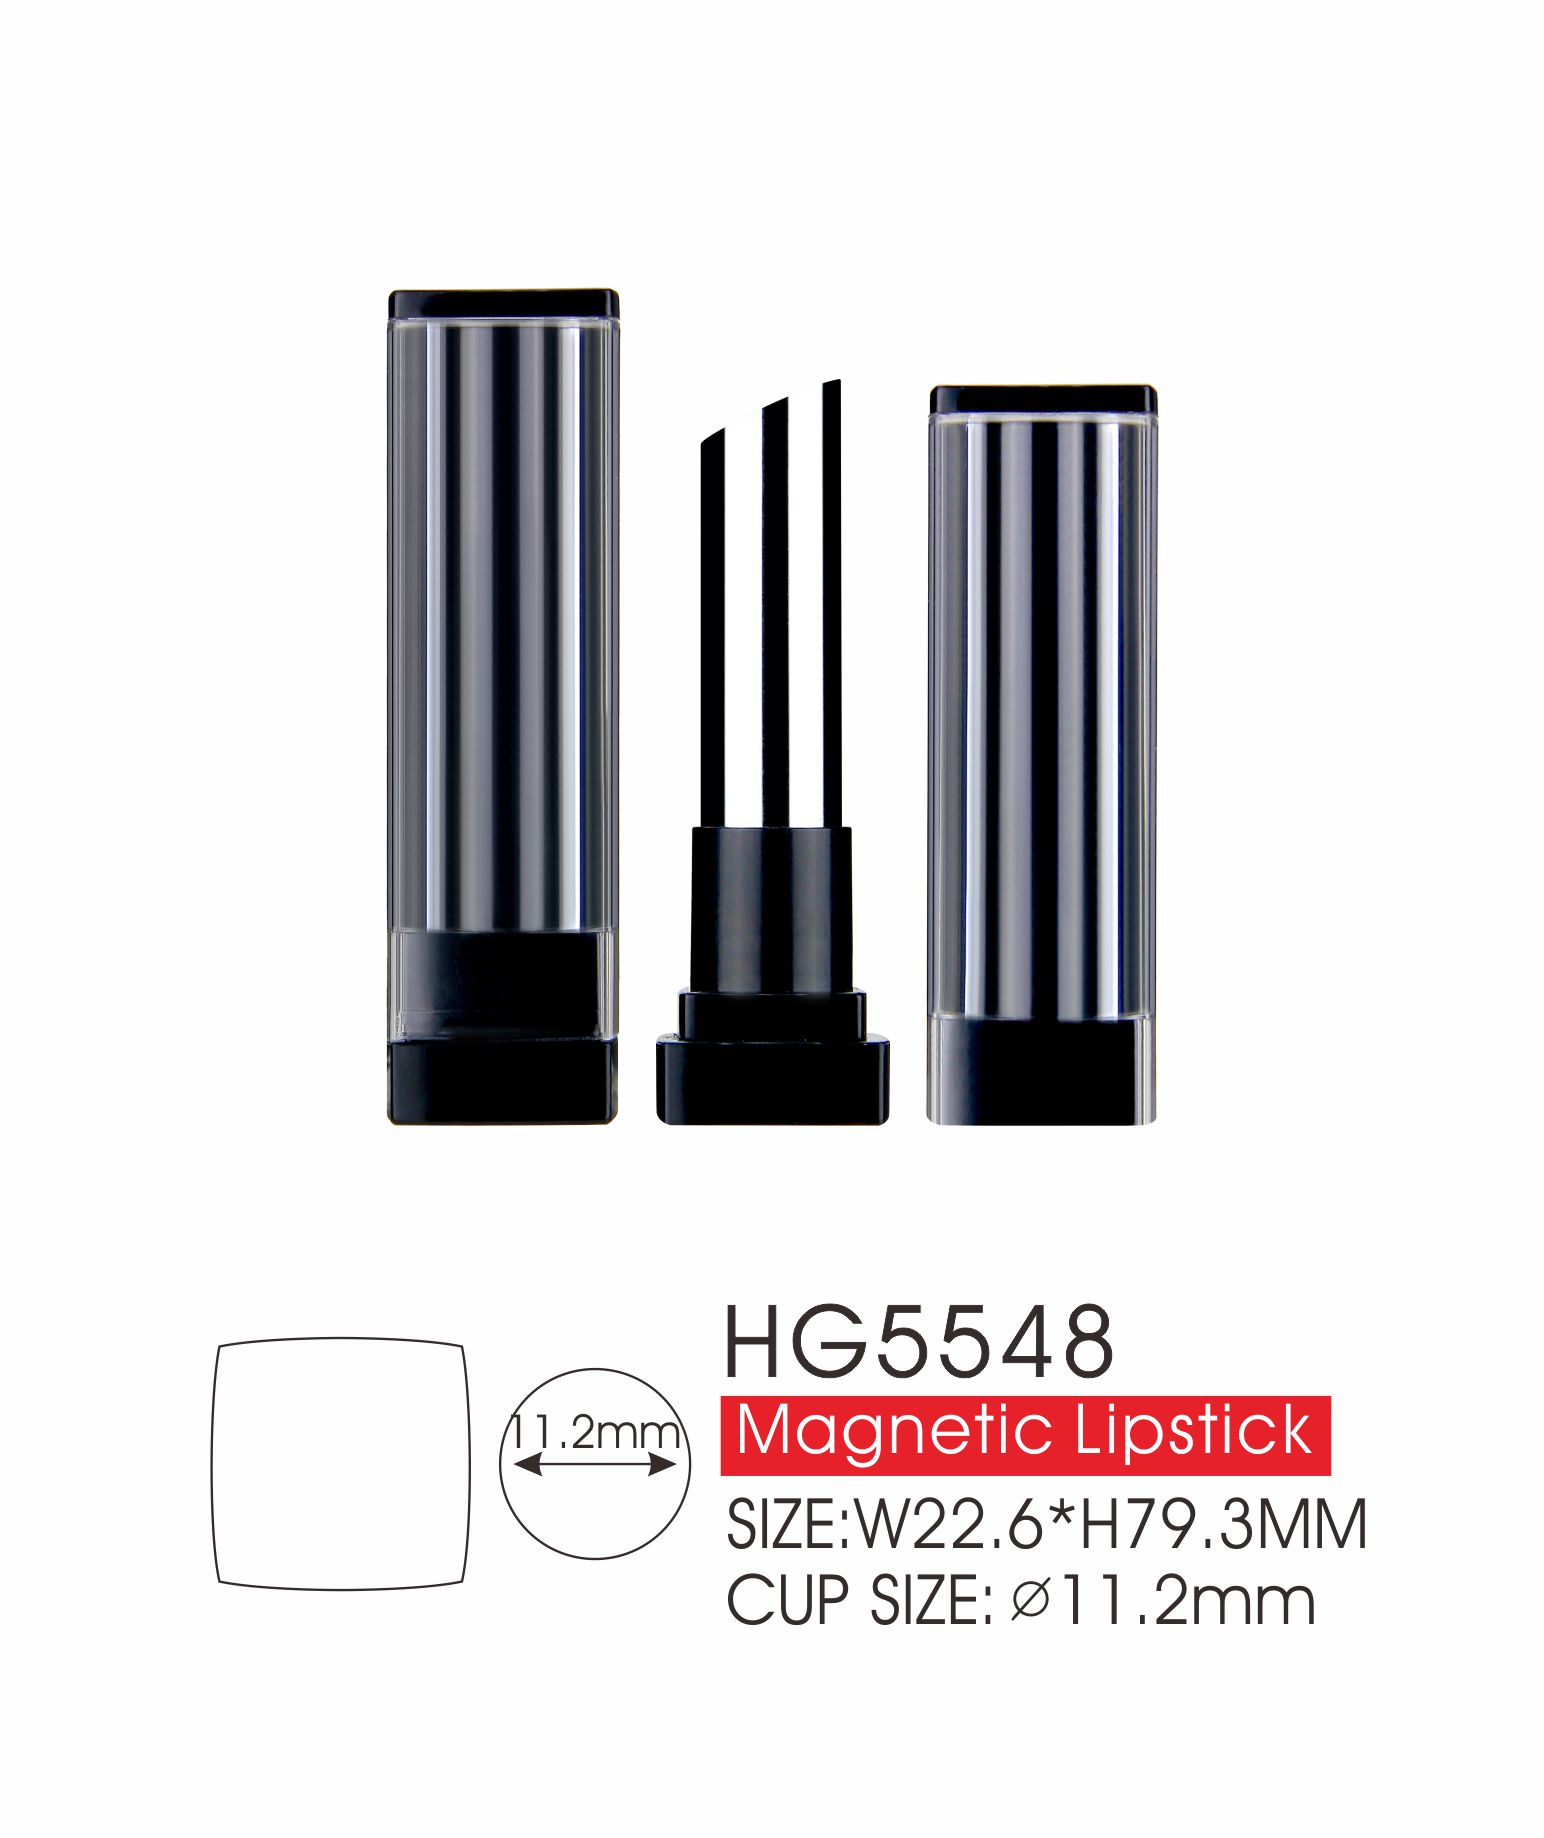 HG5548